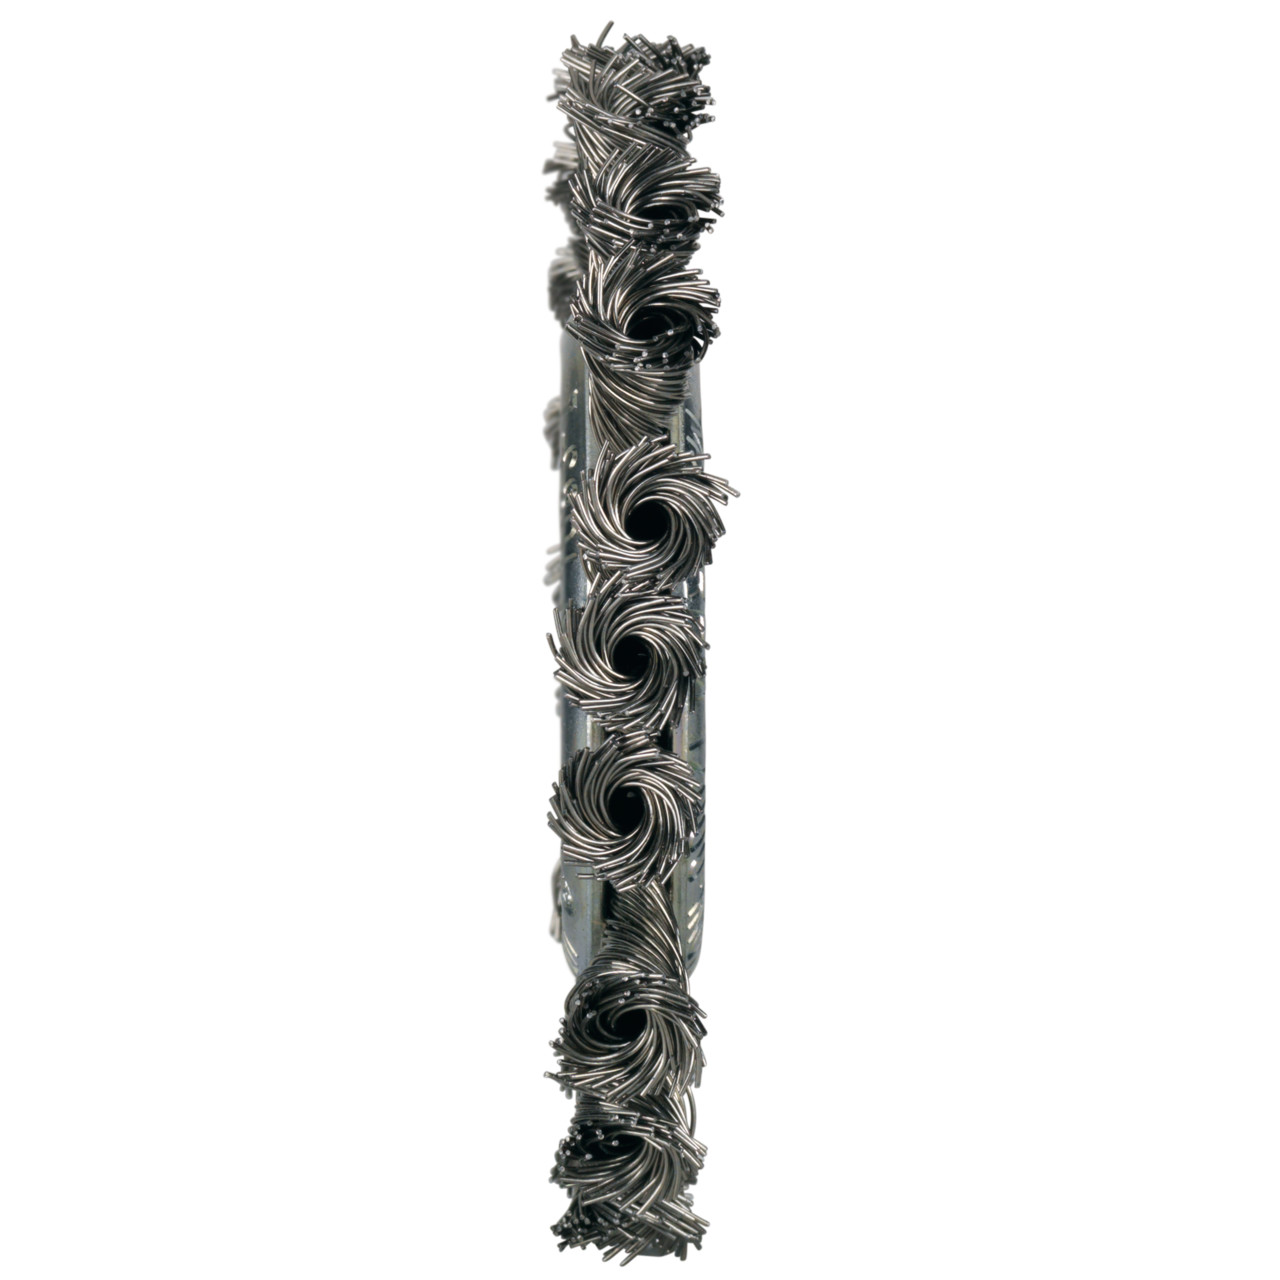 Tyrolit Brosses circulaires DxLxLGE 178x15x44xM14 Pour acier inoxydable, forme : 1RDZ - (brosse circulaire), art. 16425